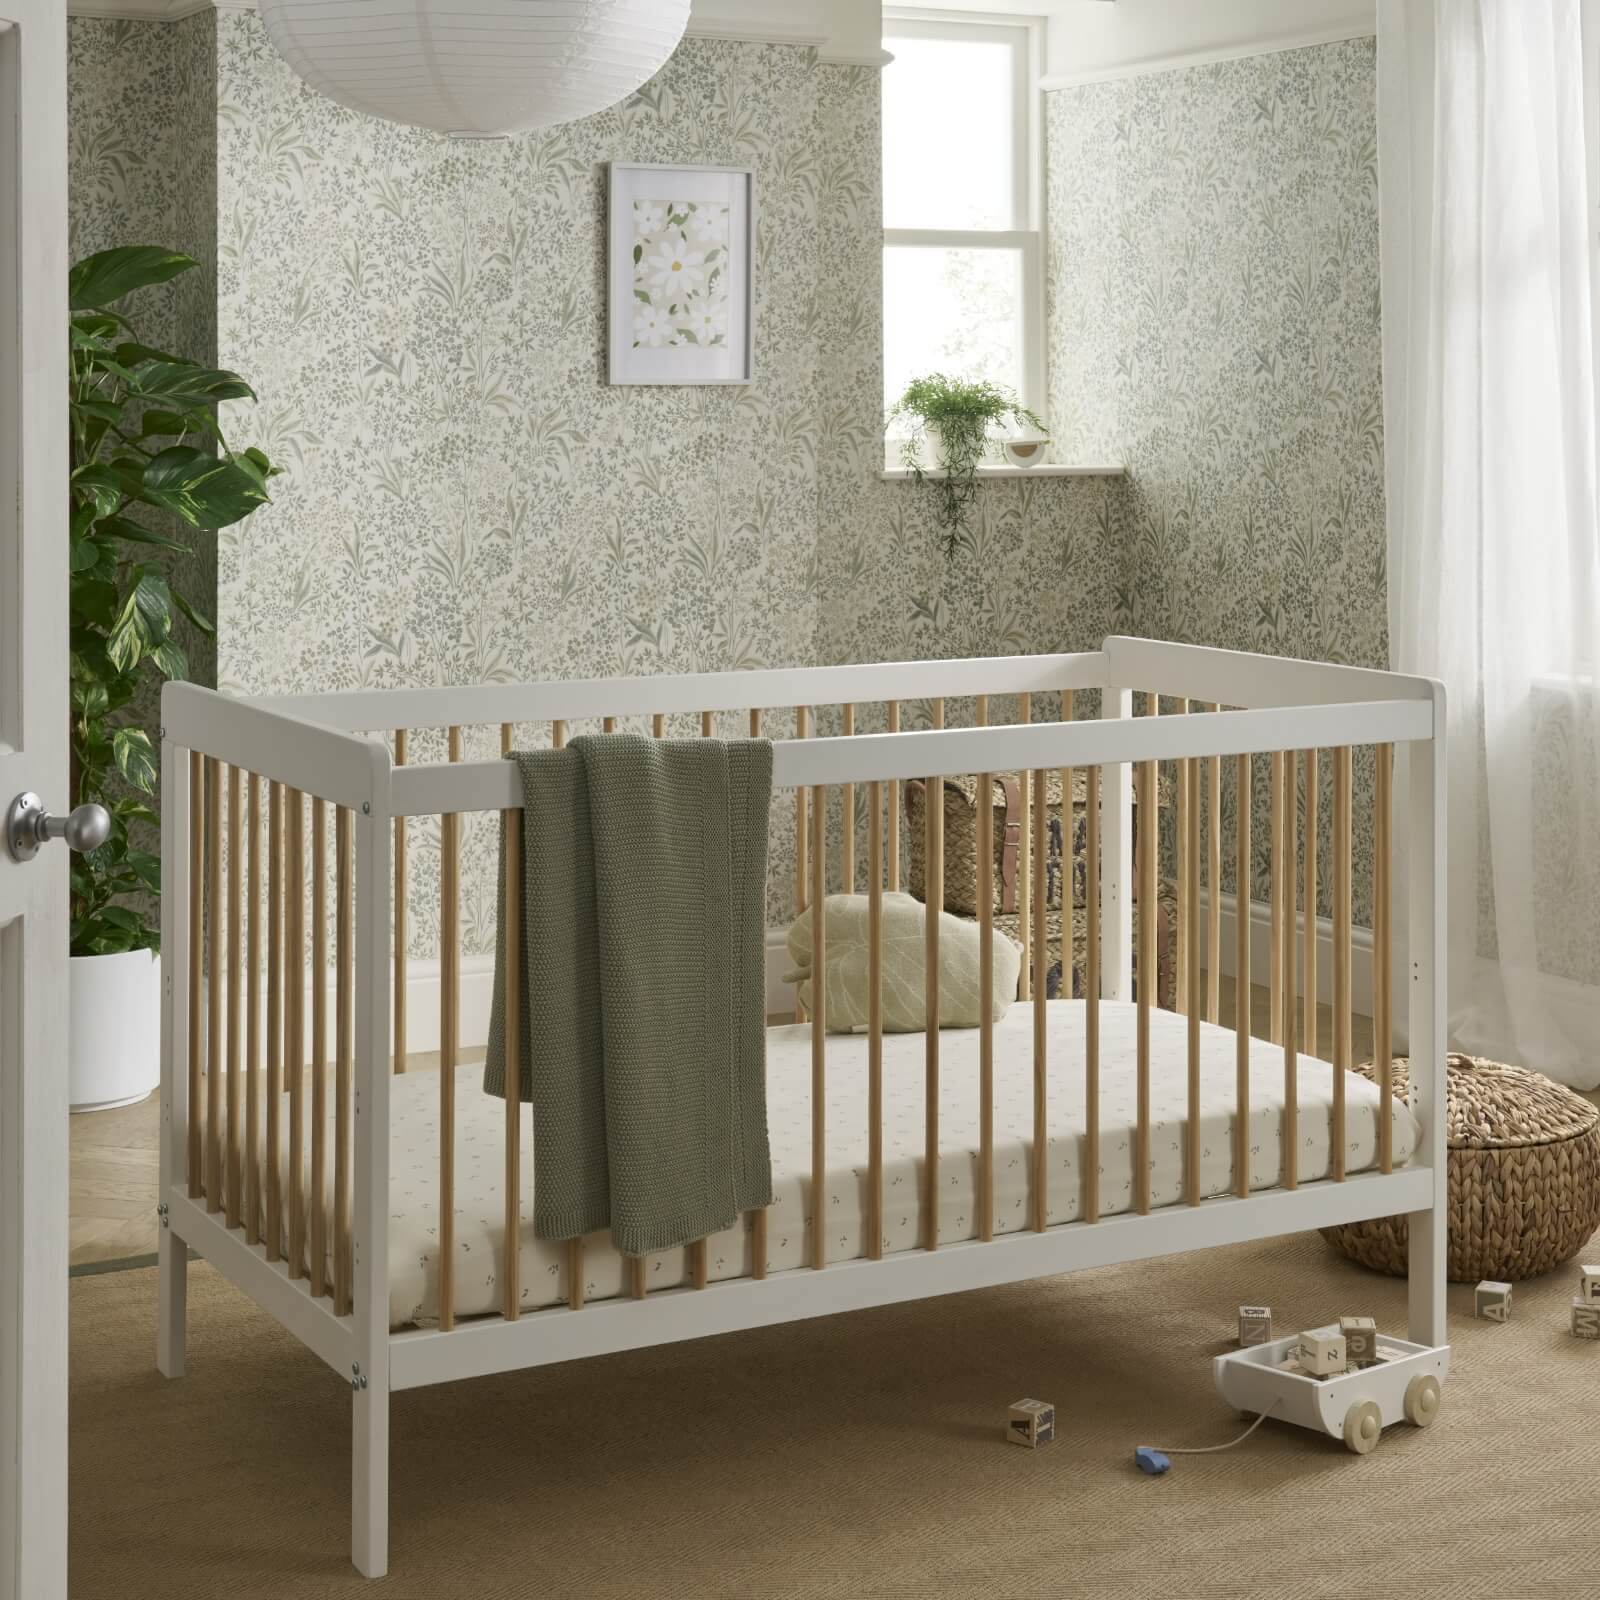 CuddleCo Nola 3 Piece Room Set in White & Natural Nursery Room Sets